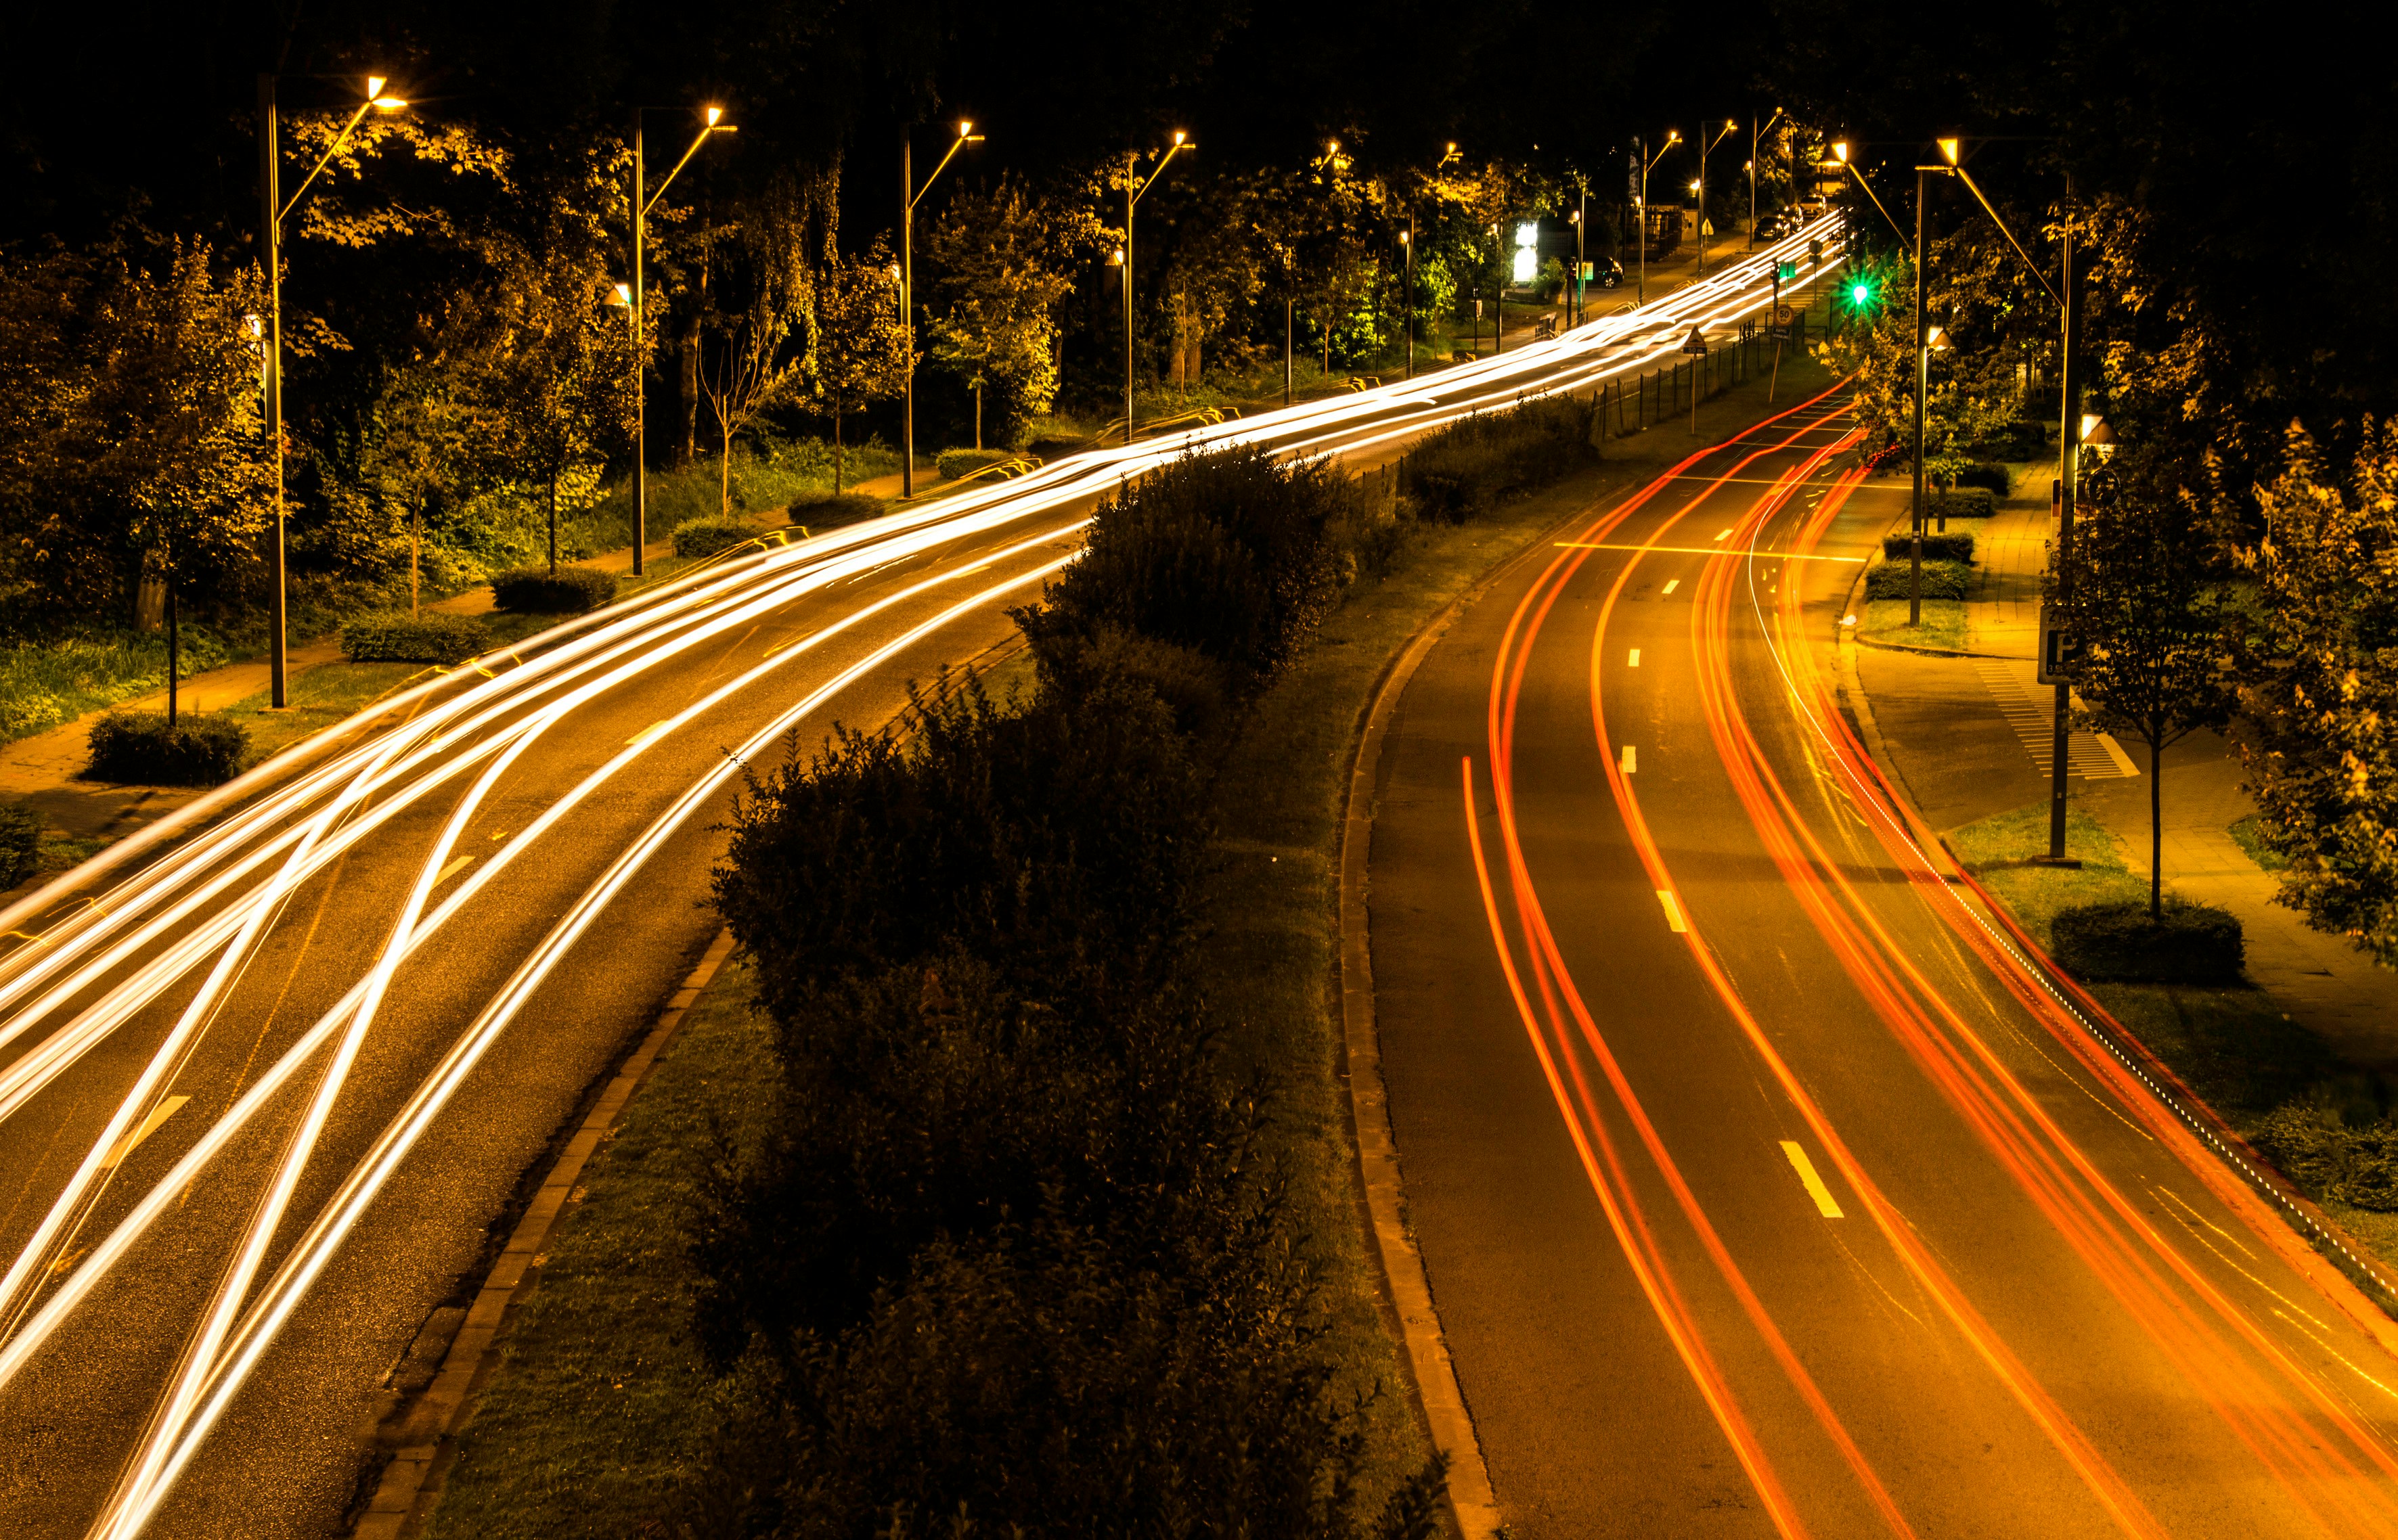 Jette highway traffic at night